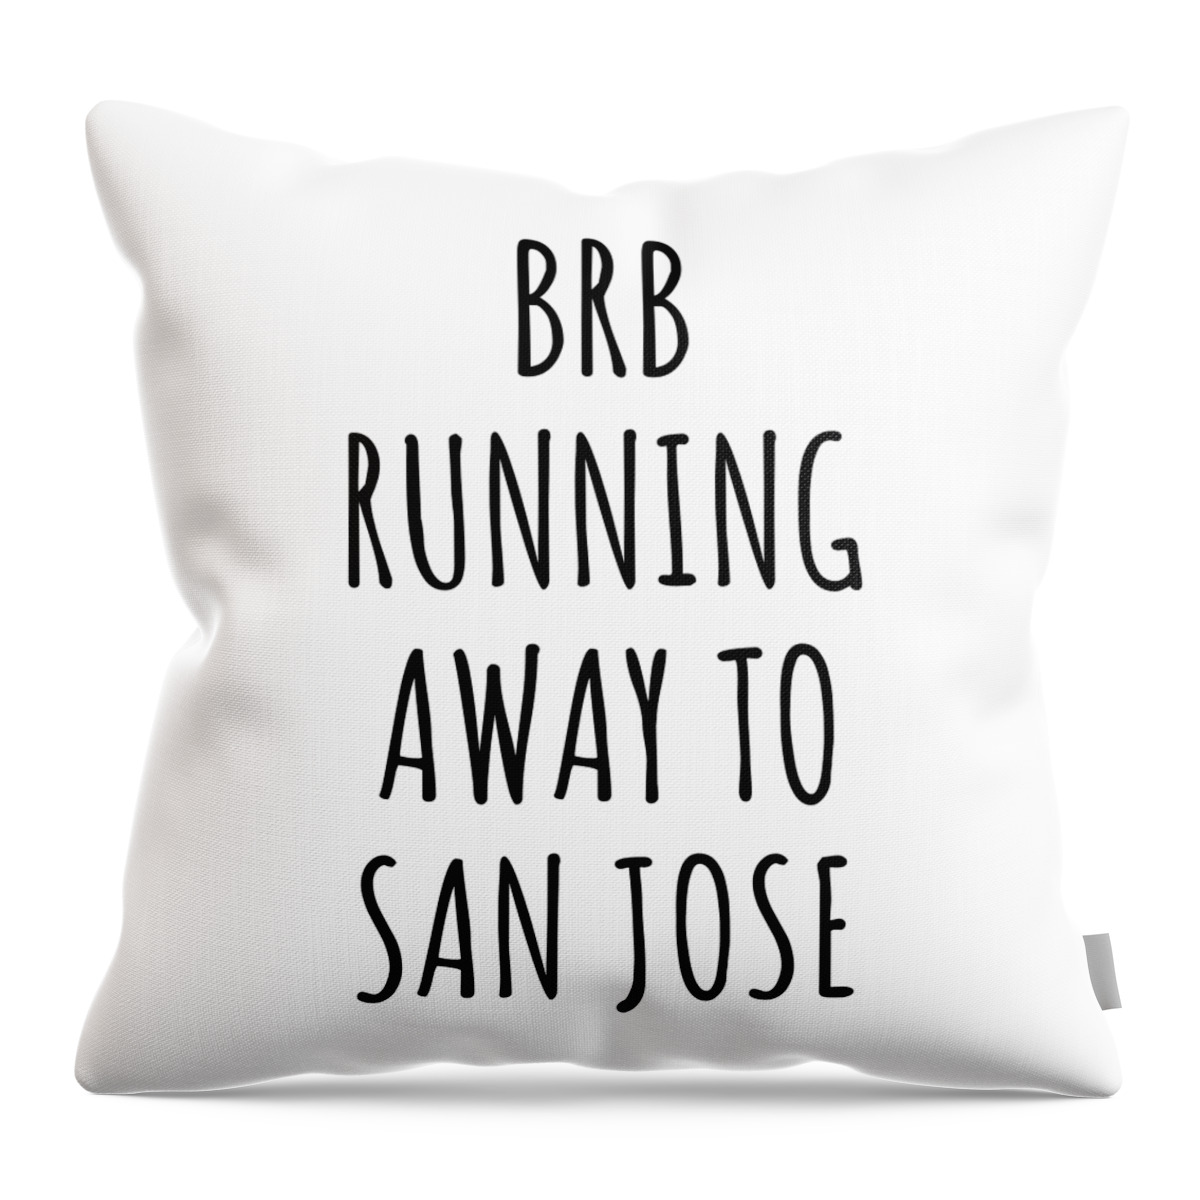 San Jose Gift Throw Pillow featuring the digital art BRB Running Away To San Jose by Jeff Creation